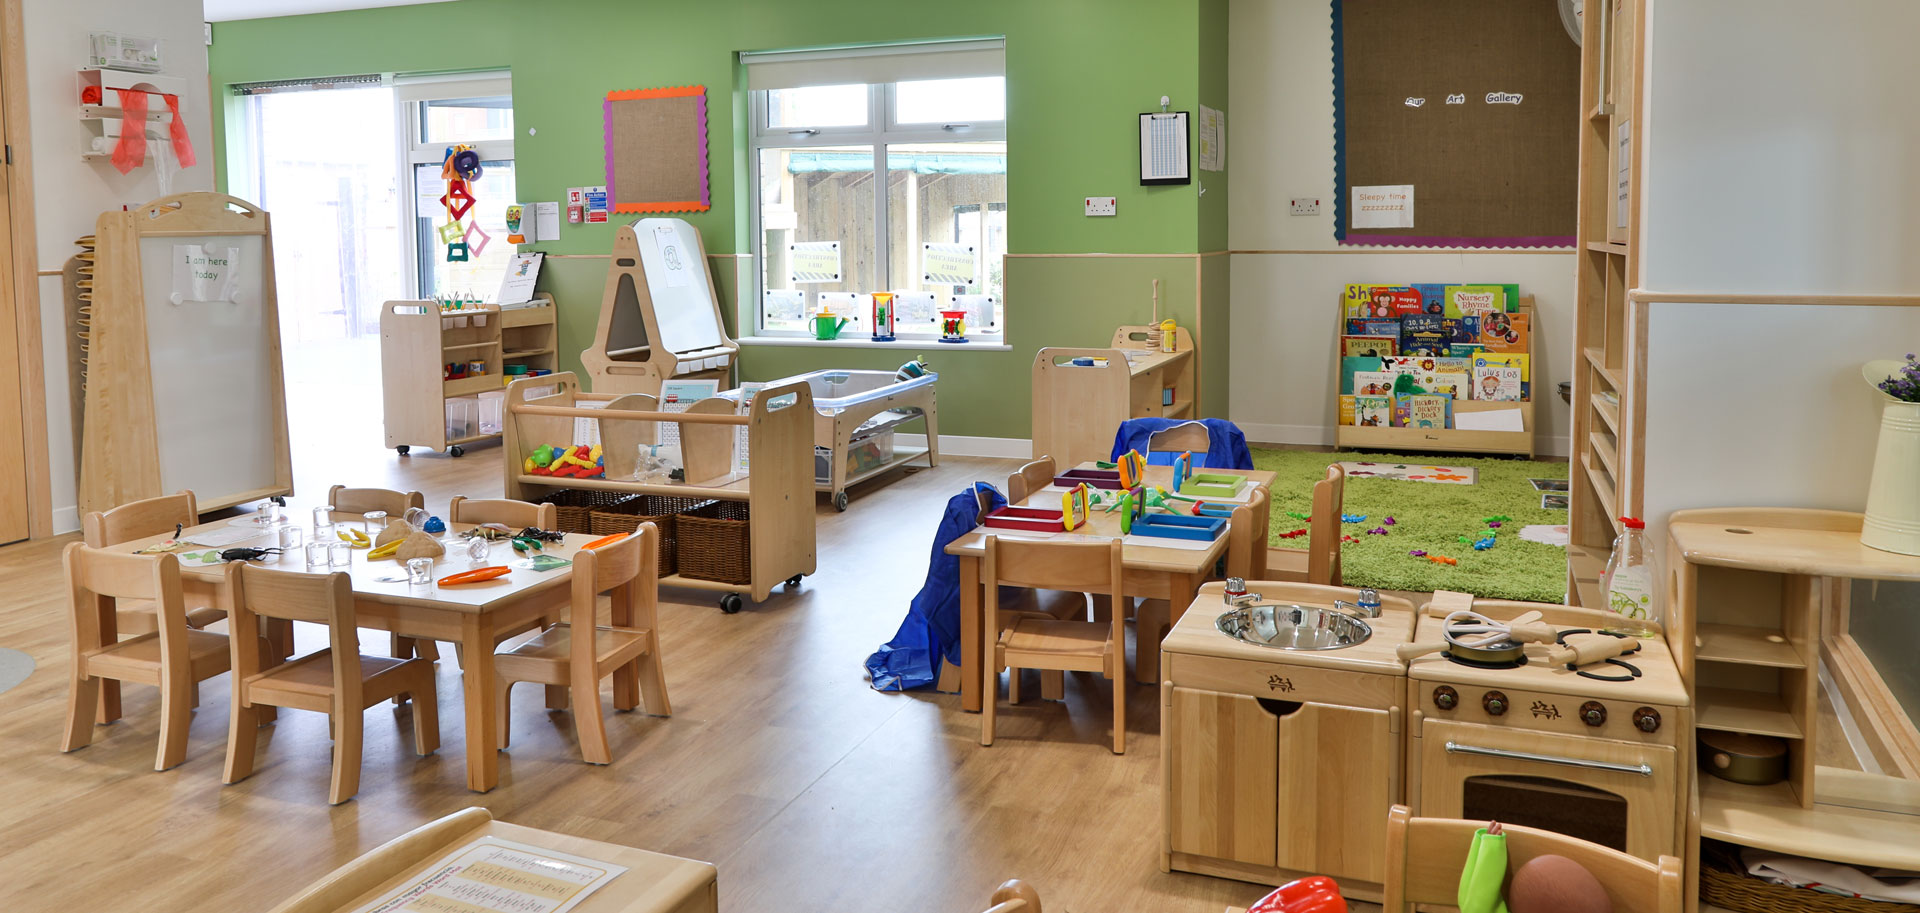 Chelmsford Day Nursery and Preschool